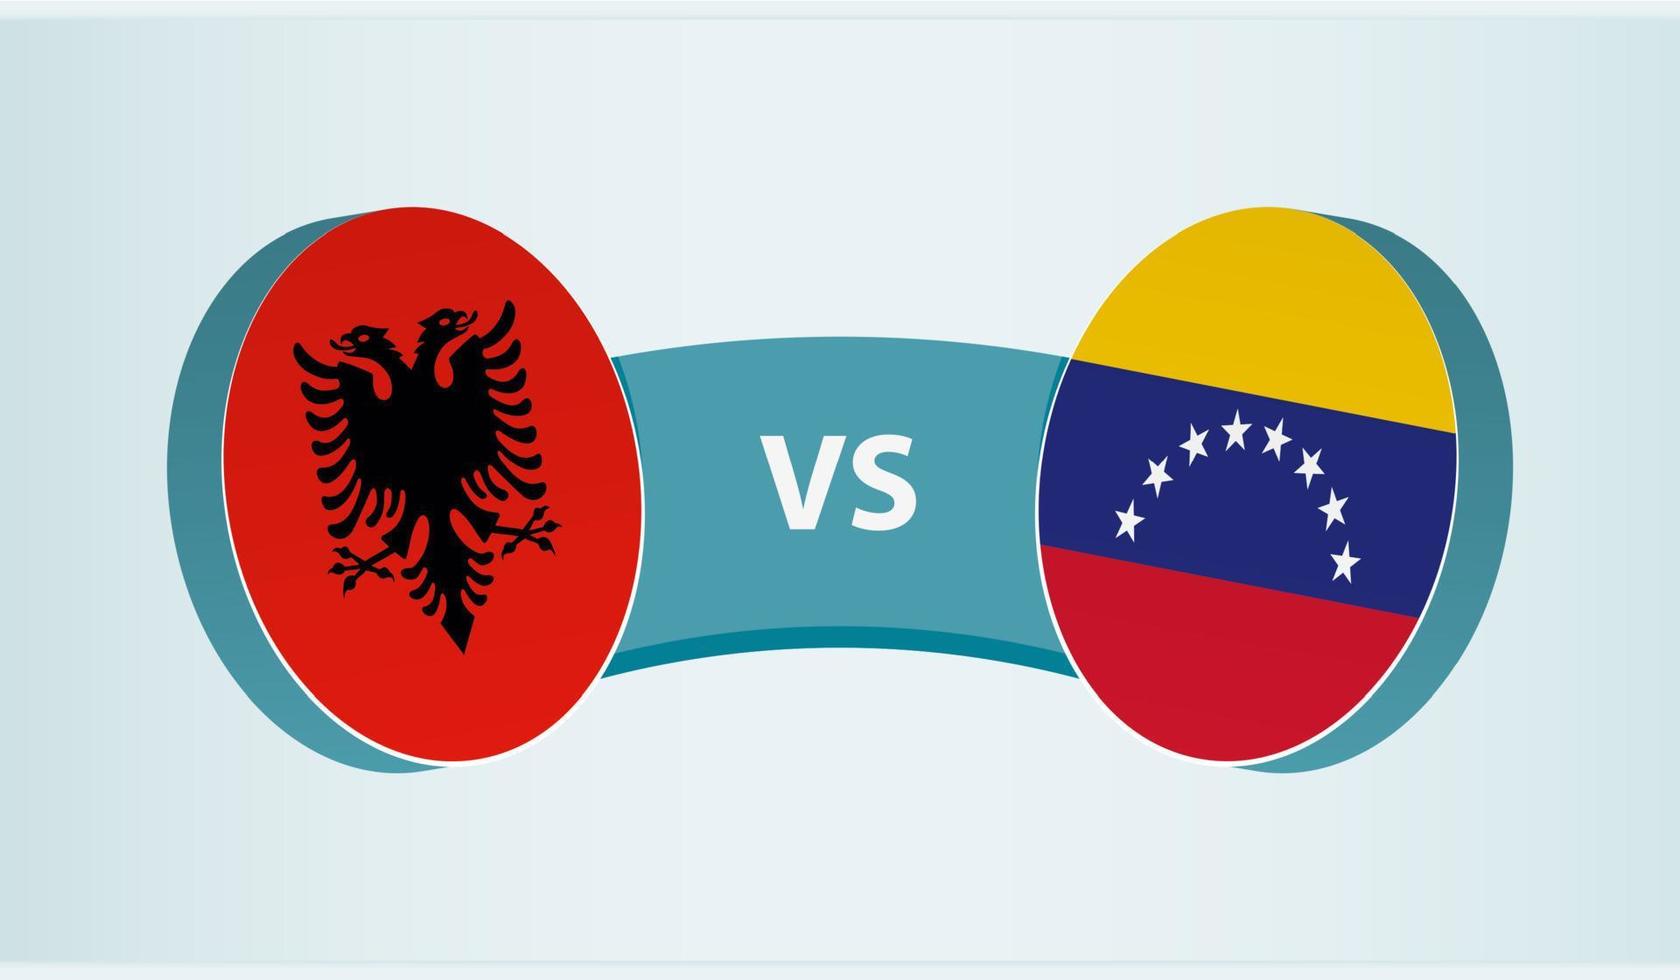 Albania versus Venezuela, team sports competition concept. vector